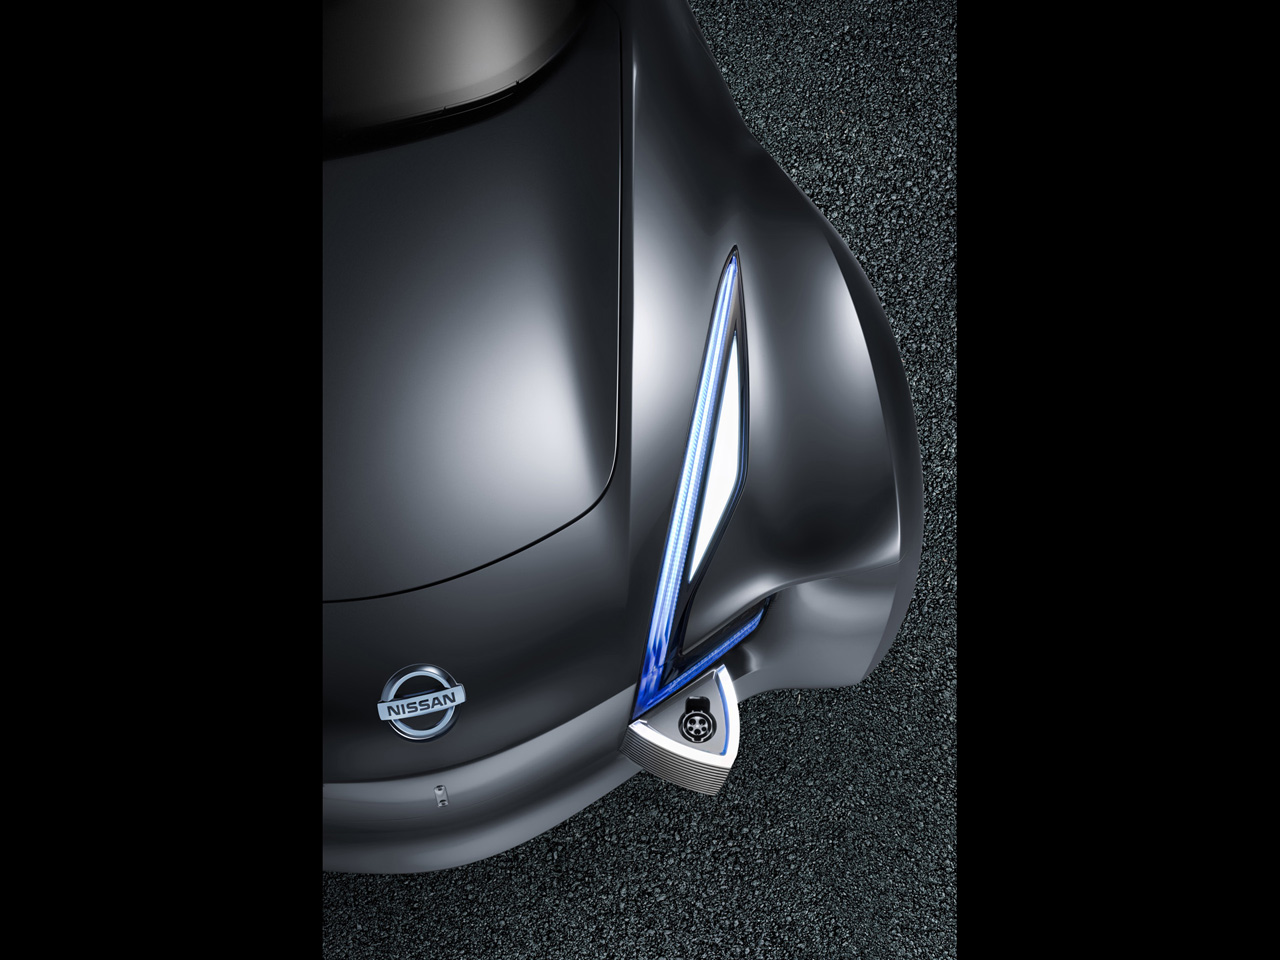 2011 Nissan Esflow Concept